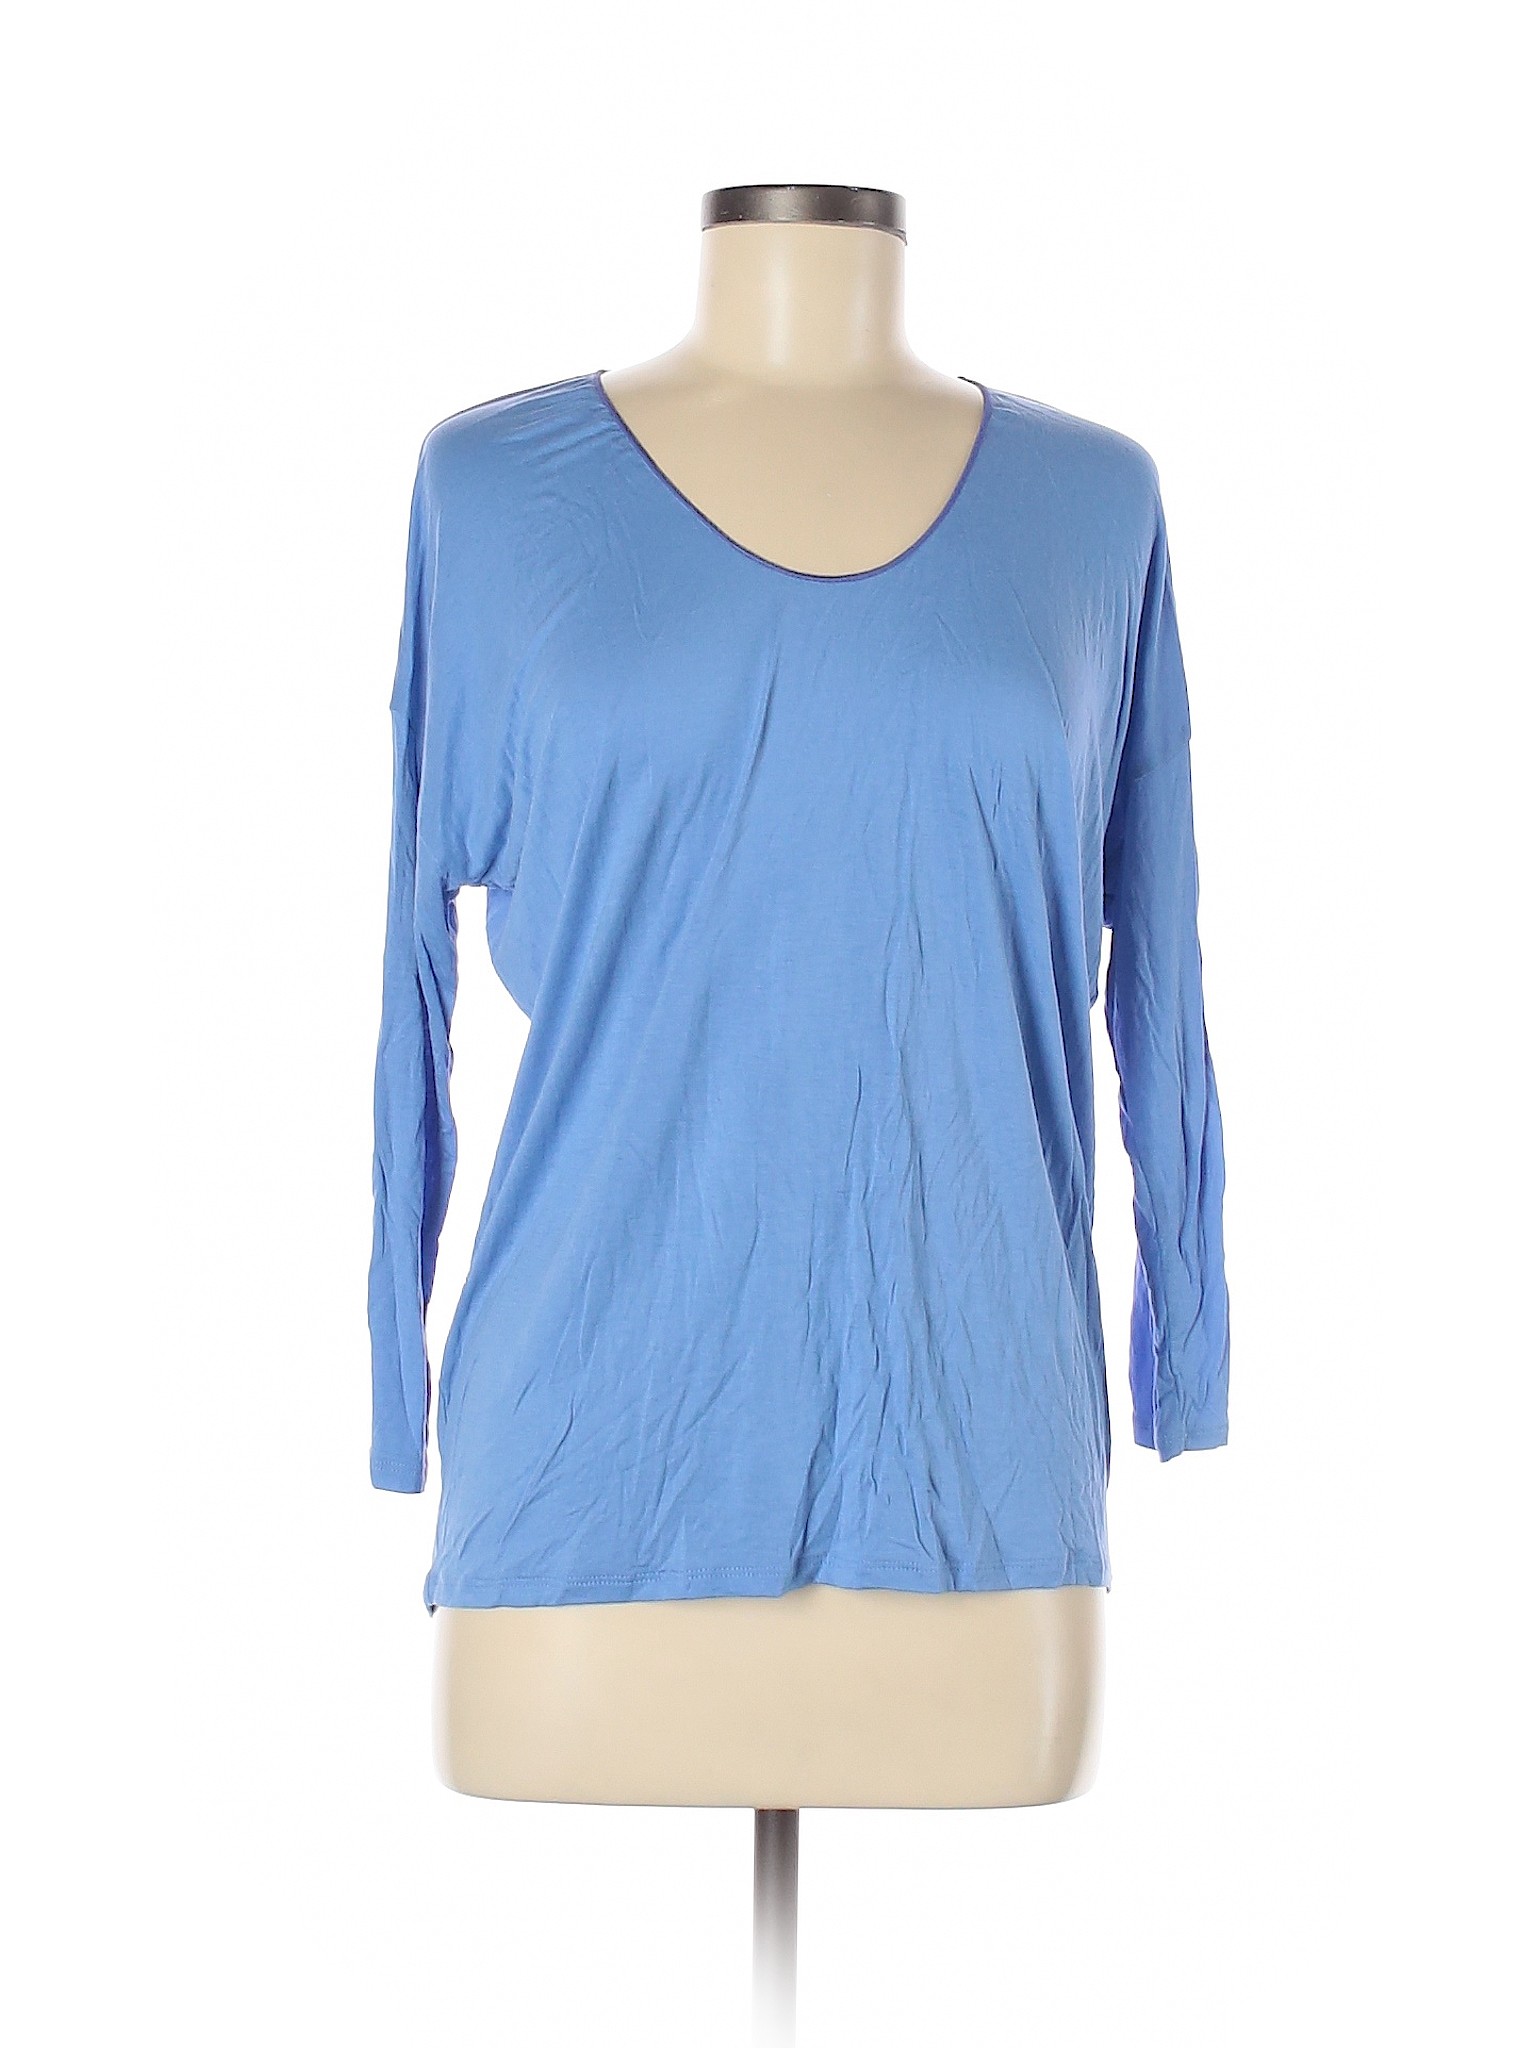 Gap Women Blue 3/4 Sleeve T-Shirt M | eBay